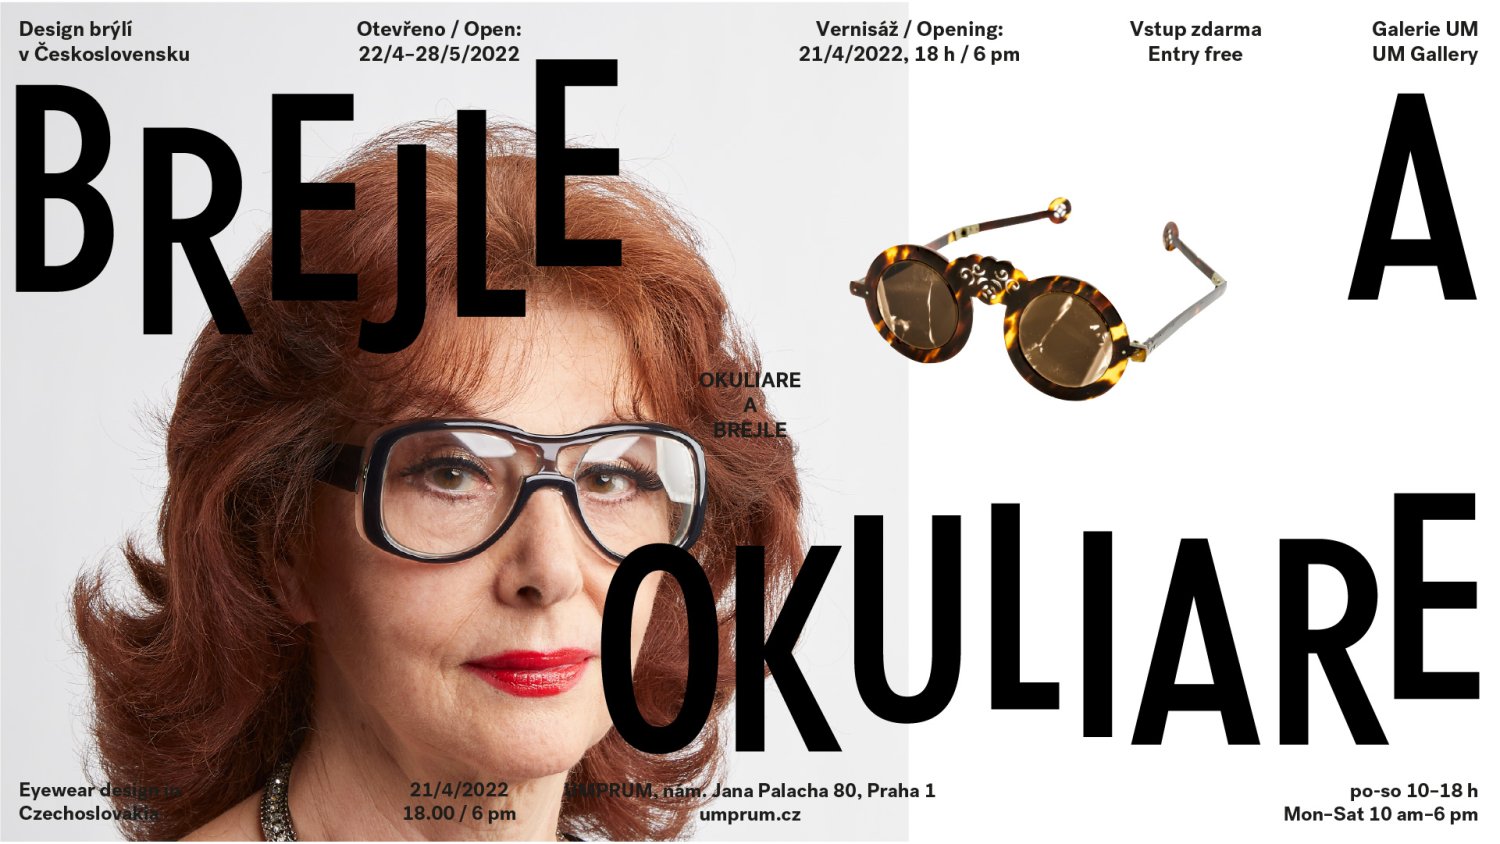 Brejle a okuliare. Design brýlí v Československu